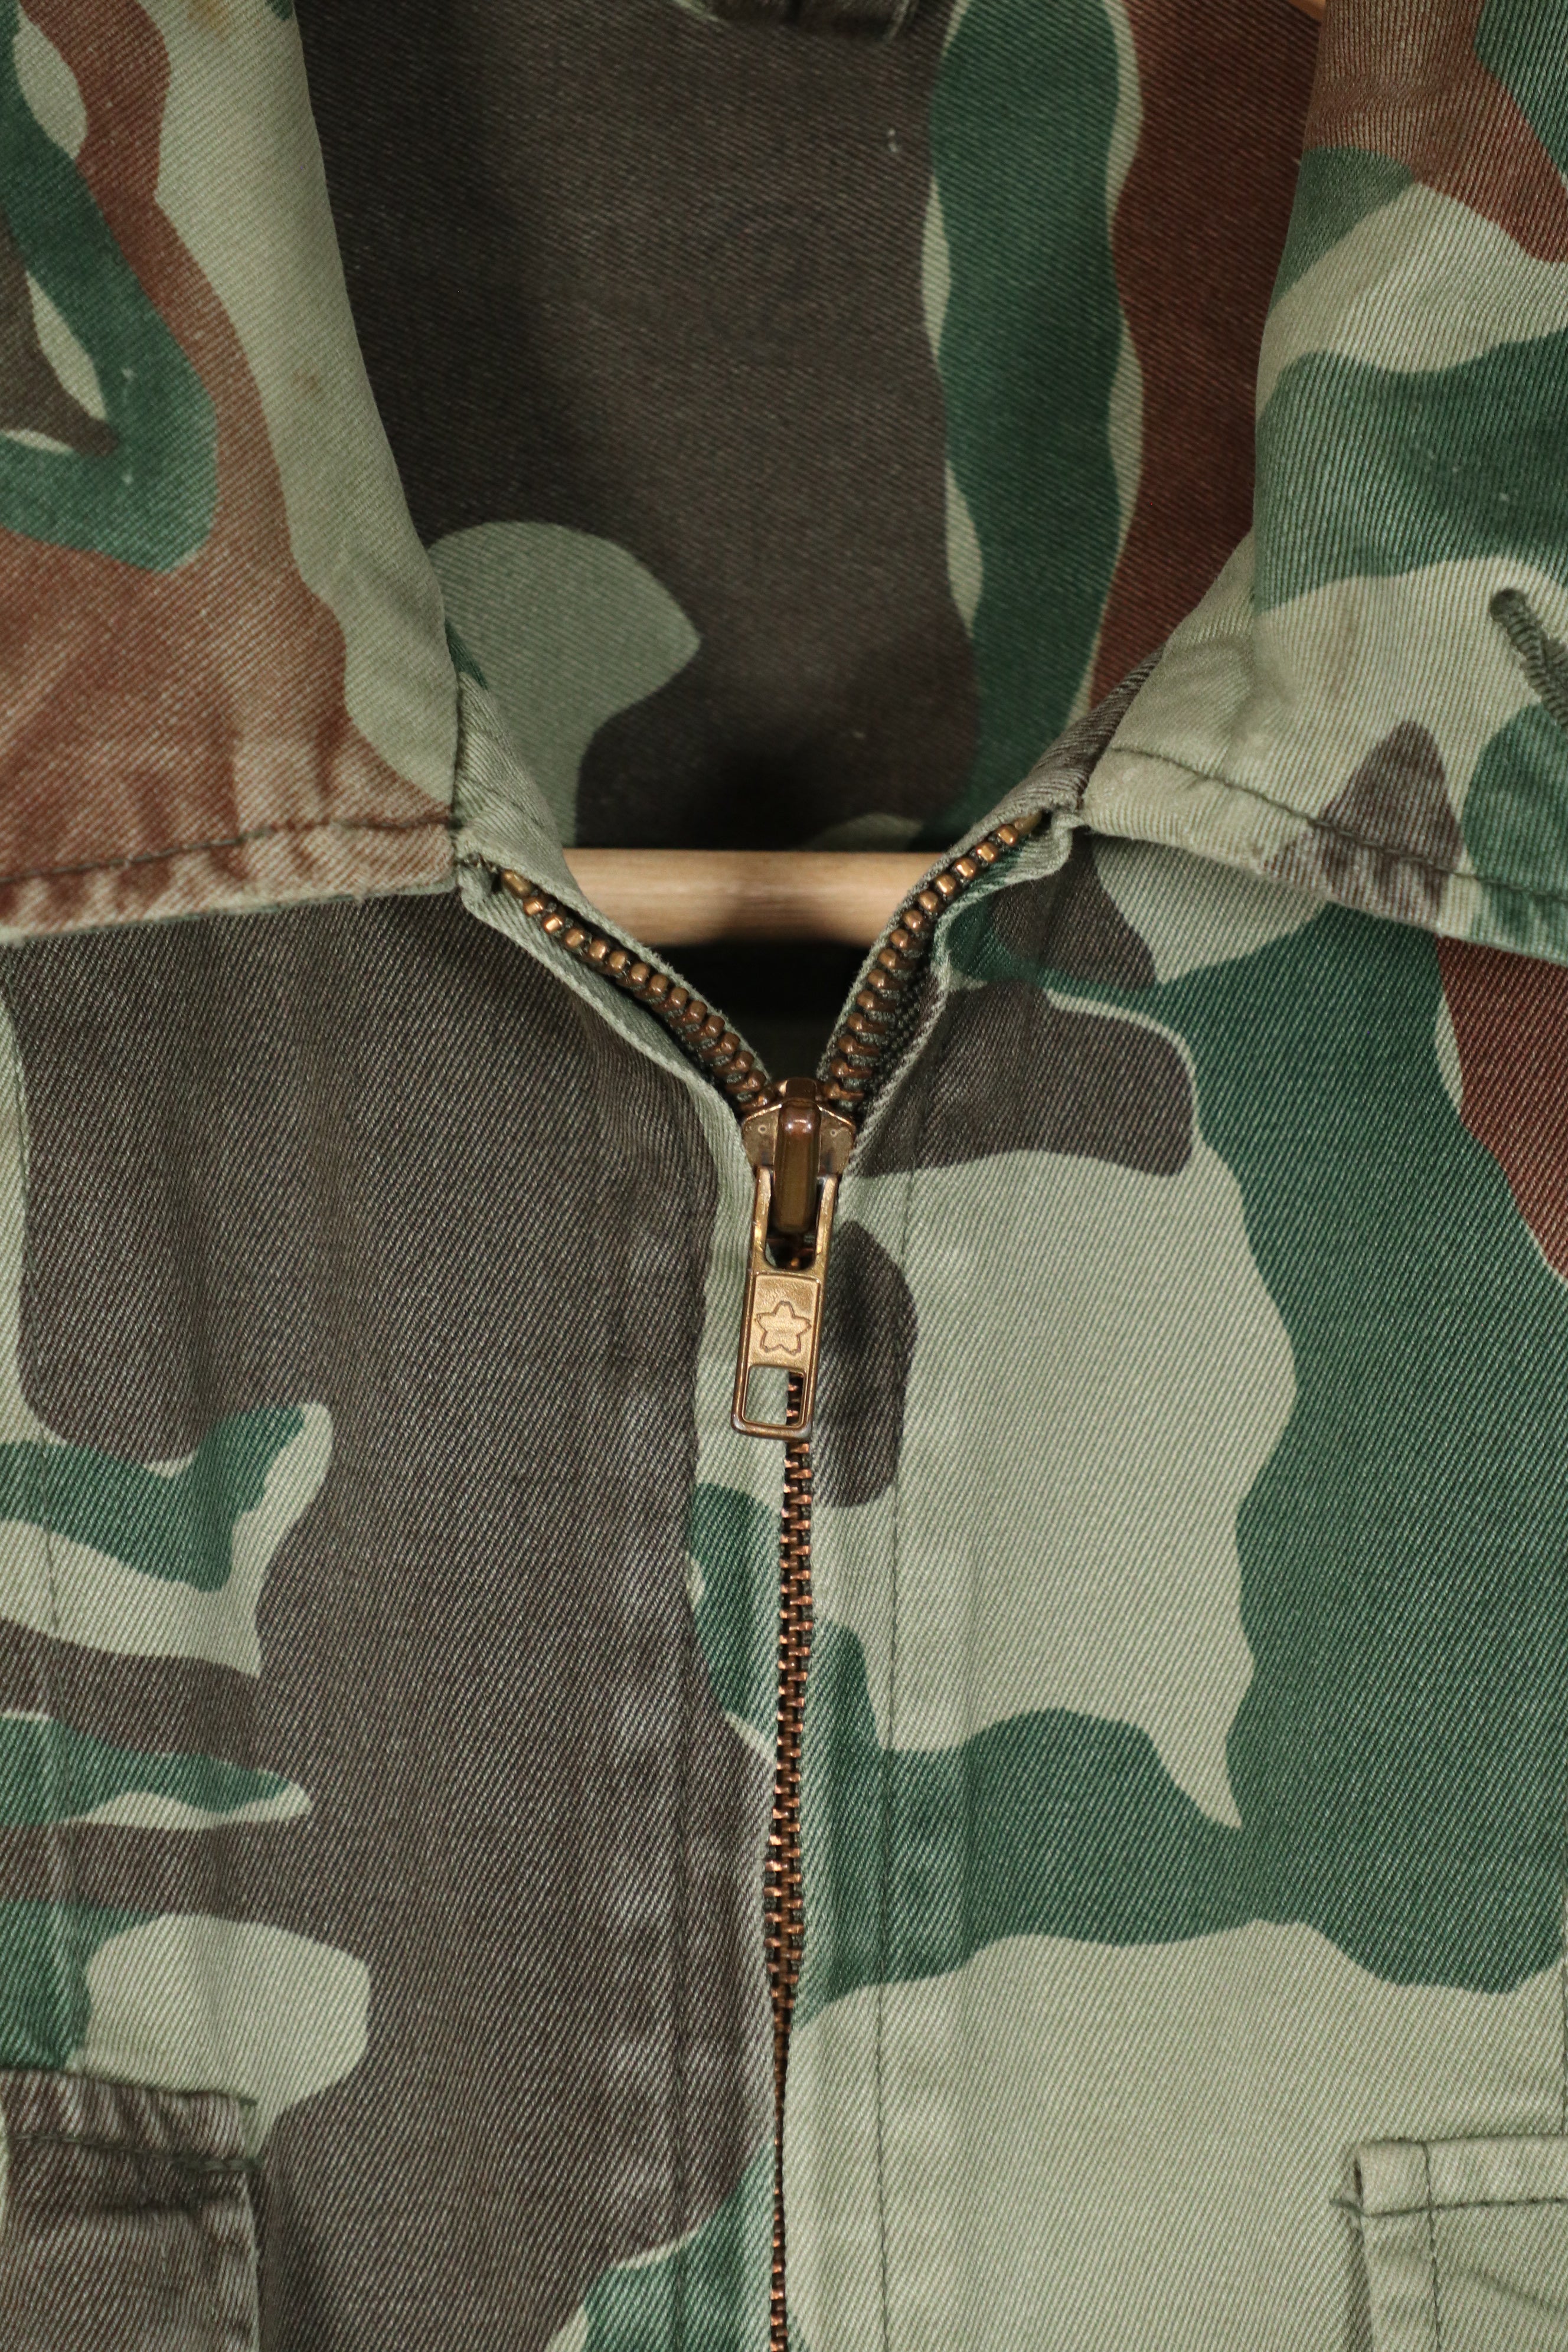 Real Japan Ground Self-Defense Force 1980's Kumazasa Camouflage Jacket, Used, Scratches